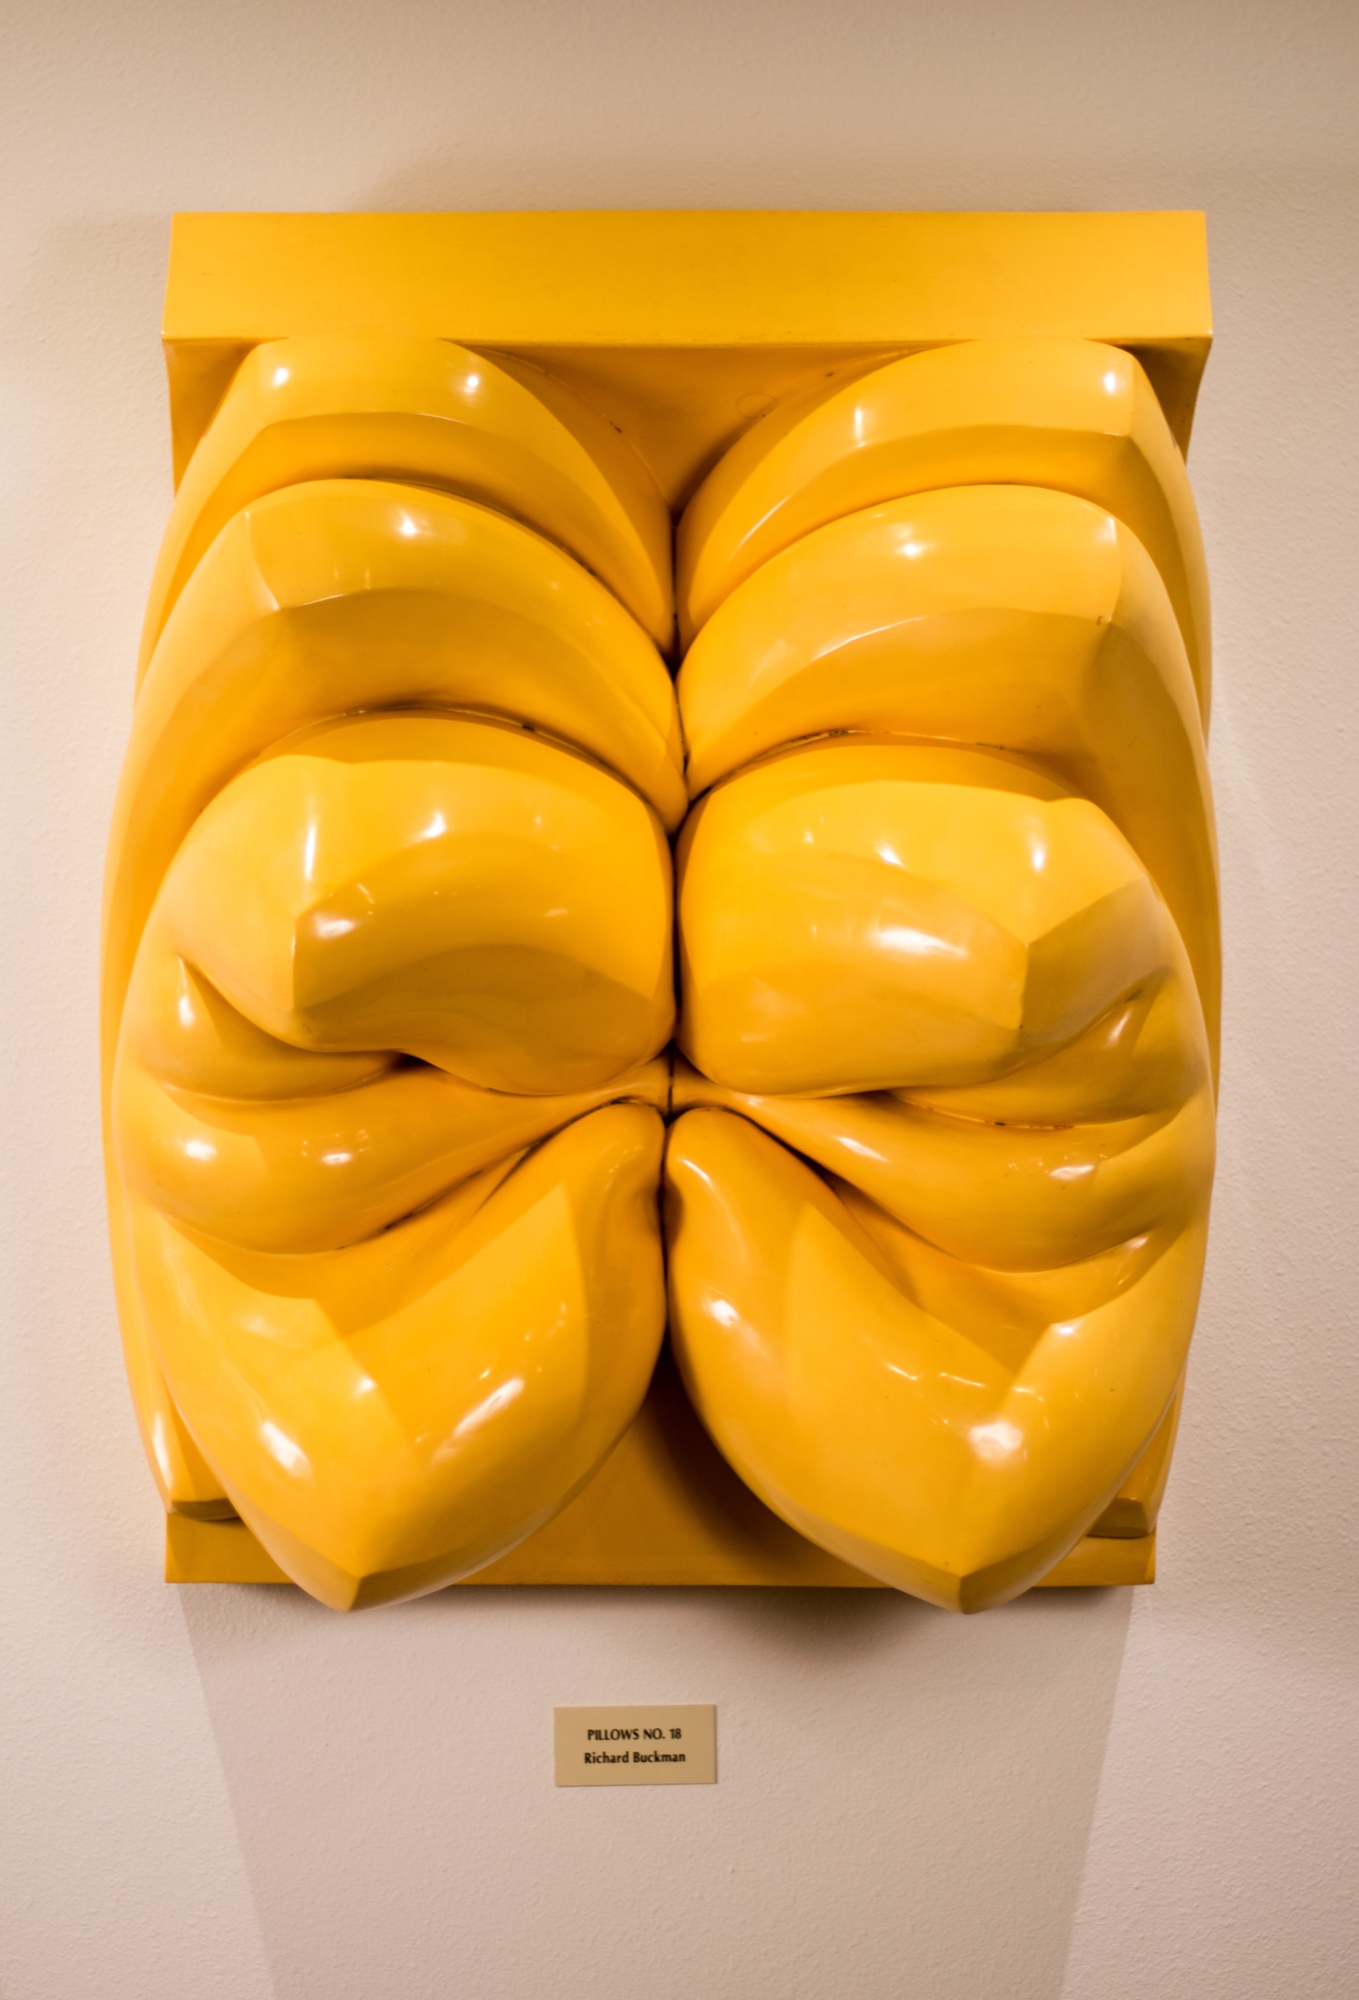 1973 Sculpture: Pillows No. 18